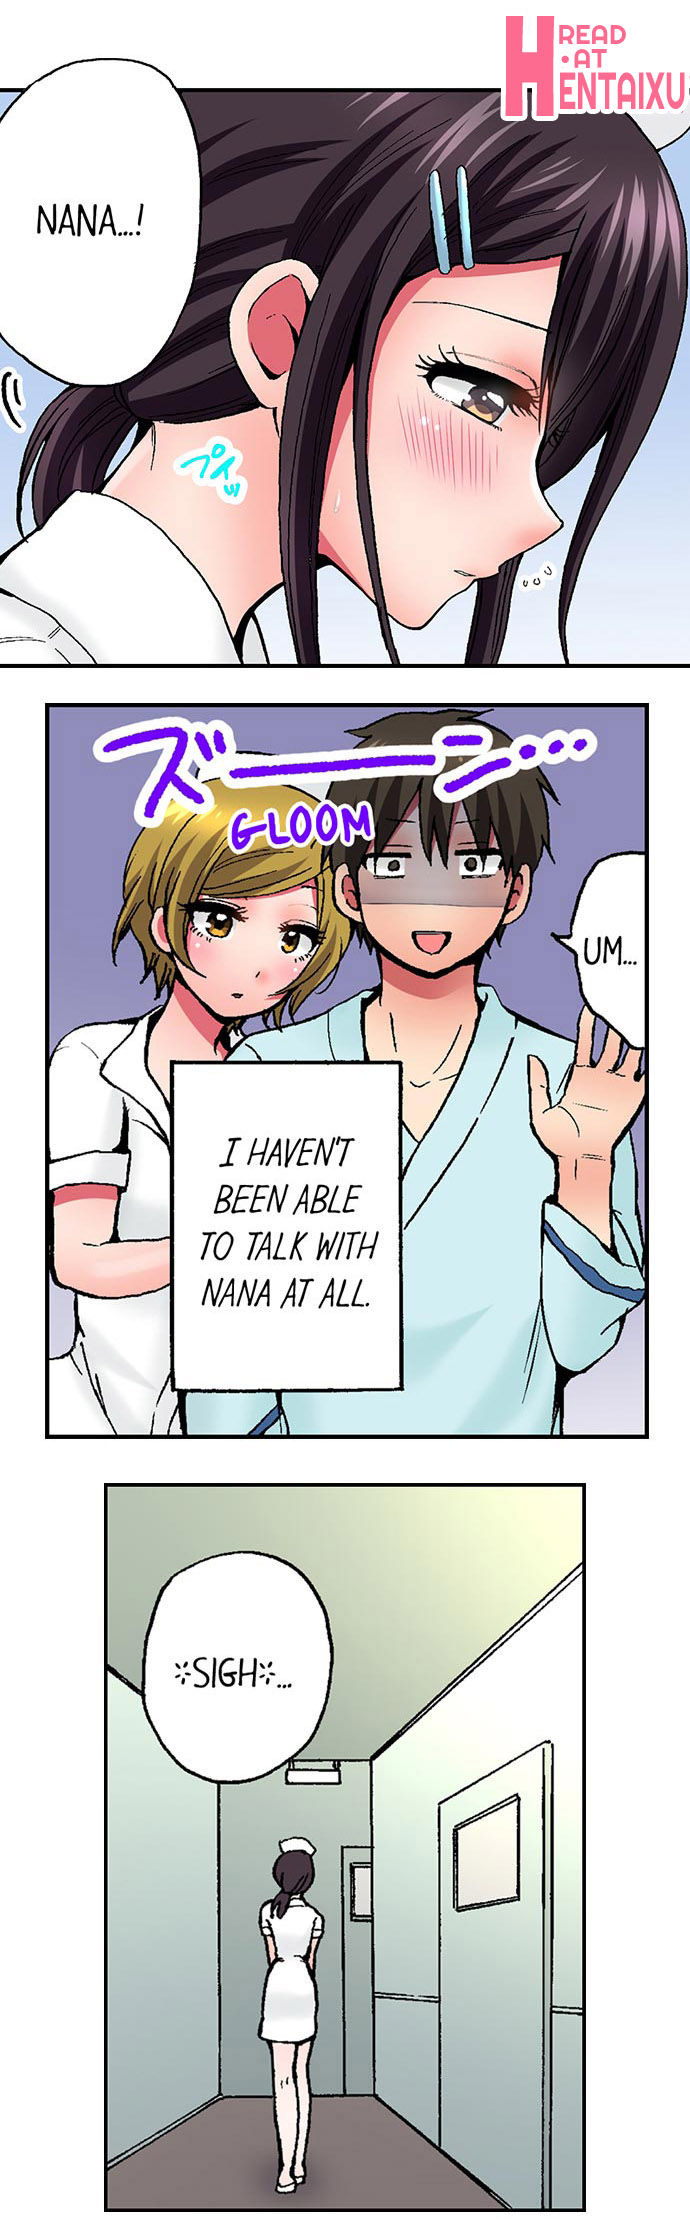 [Yukikuni] Pranking the Working Nurse Ch.17/? [English] [Hentai Universe]